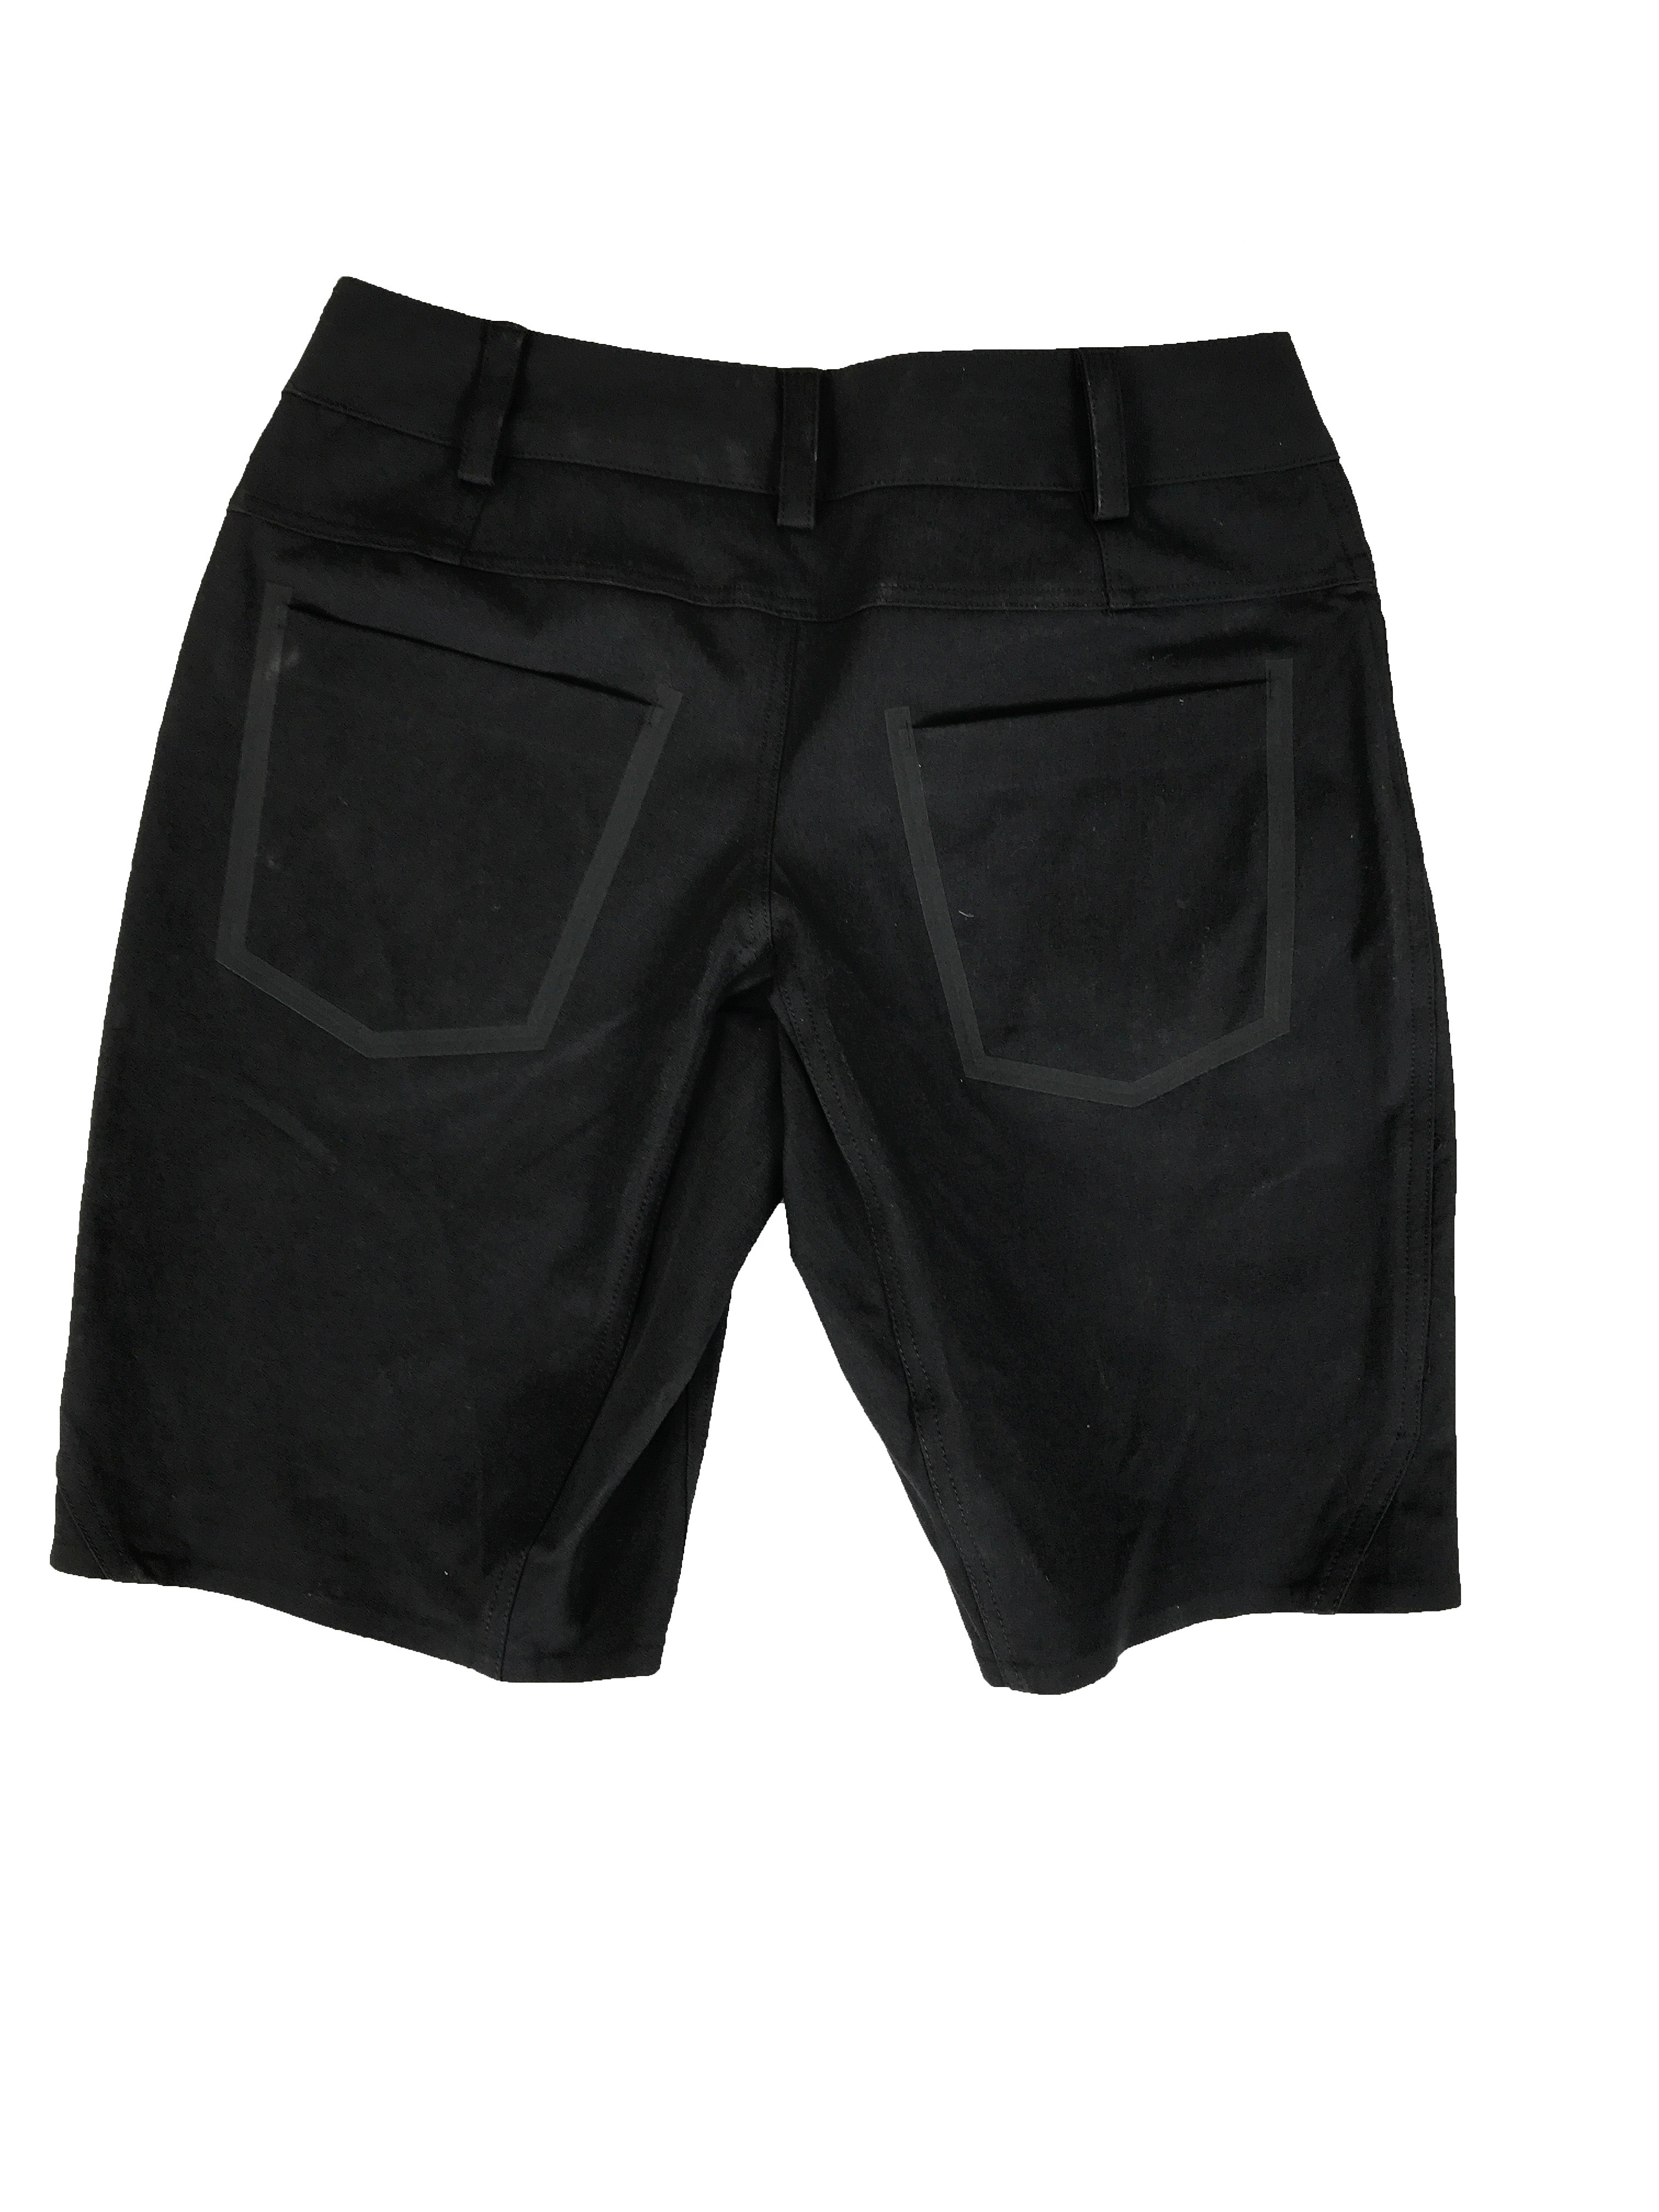 Specialized RBX ADV Black Shorts Women's Size S NWT